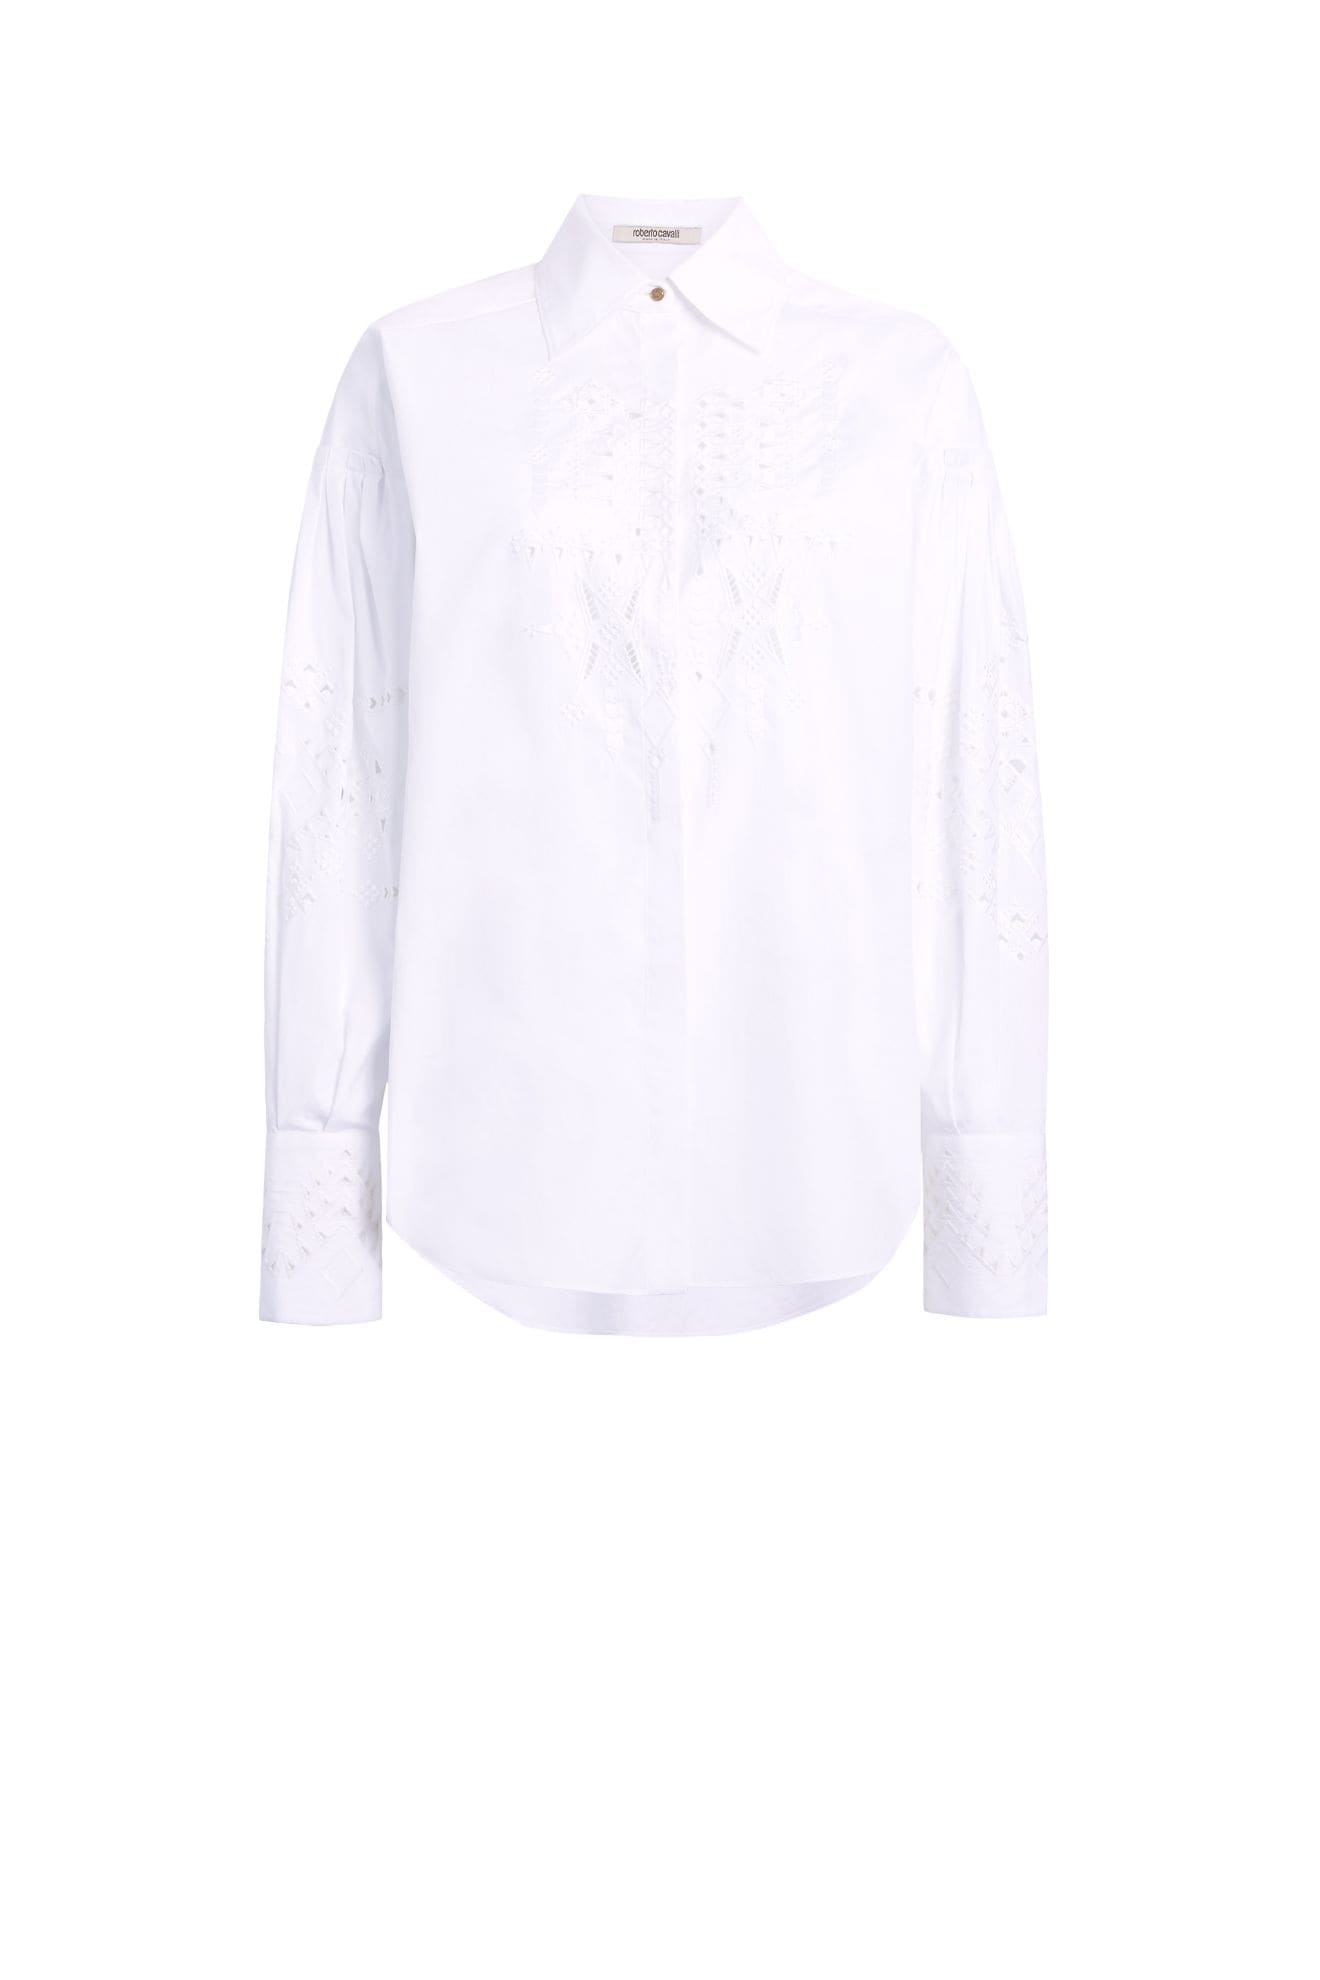 San Gallo lace shirt | Roberto Cavalli #{ProductCategoryName ...